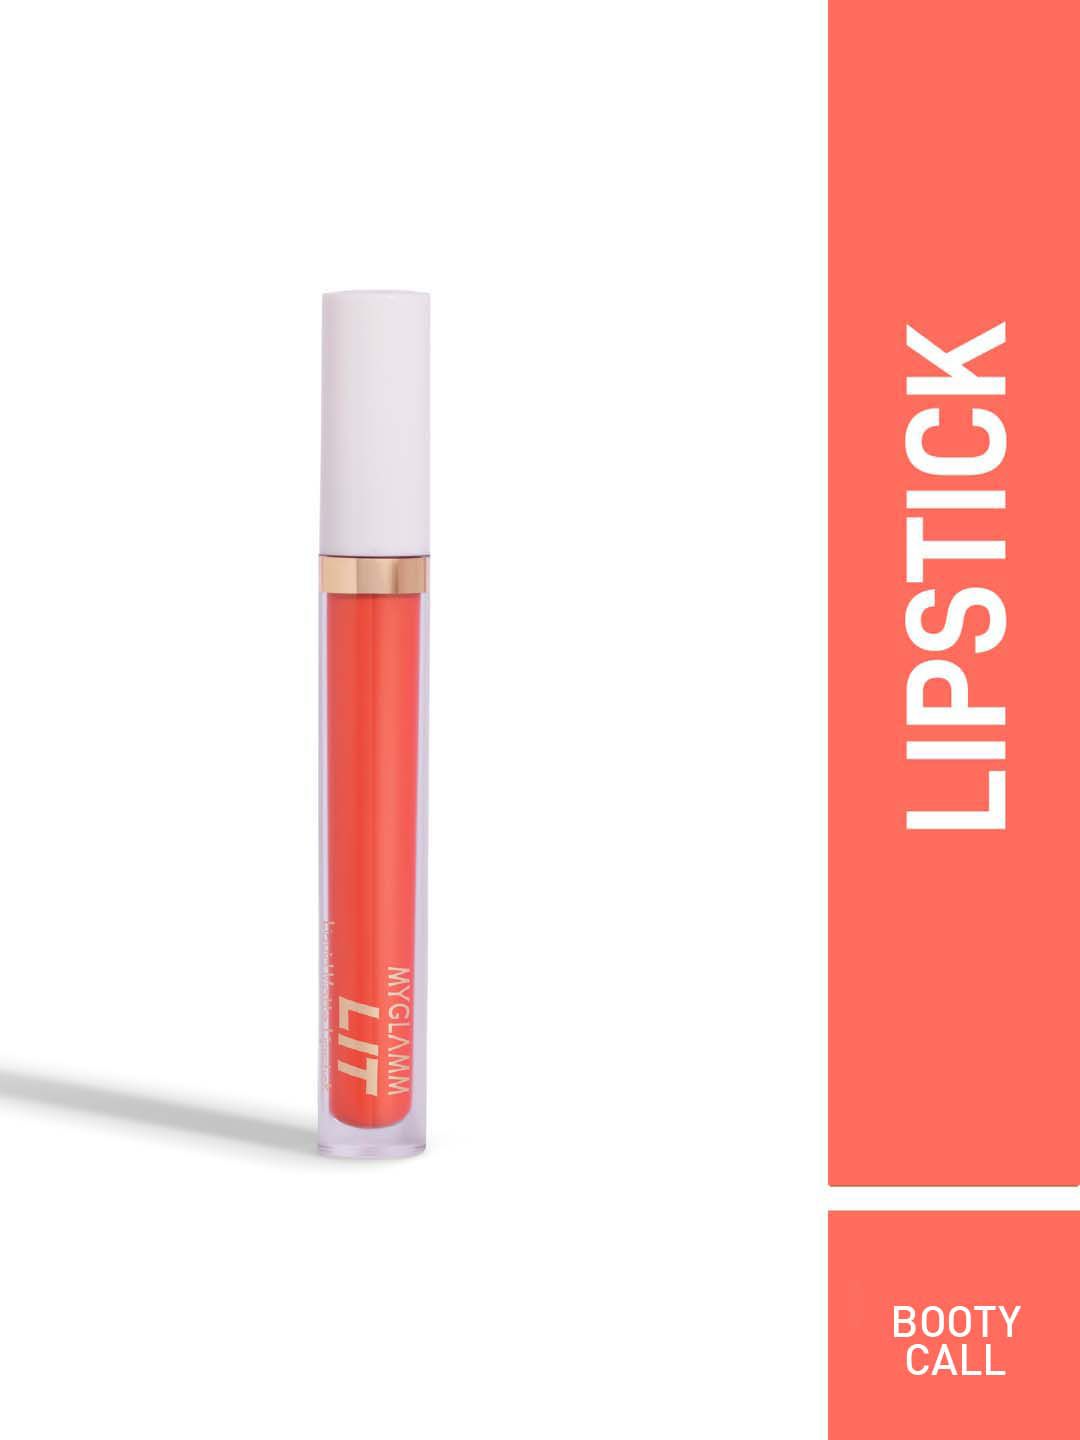 MyGlamm LIT Liquid Matte Lipstick 3 ml - Booty Call Price in India